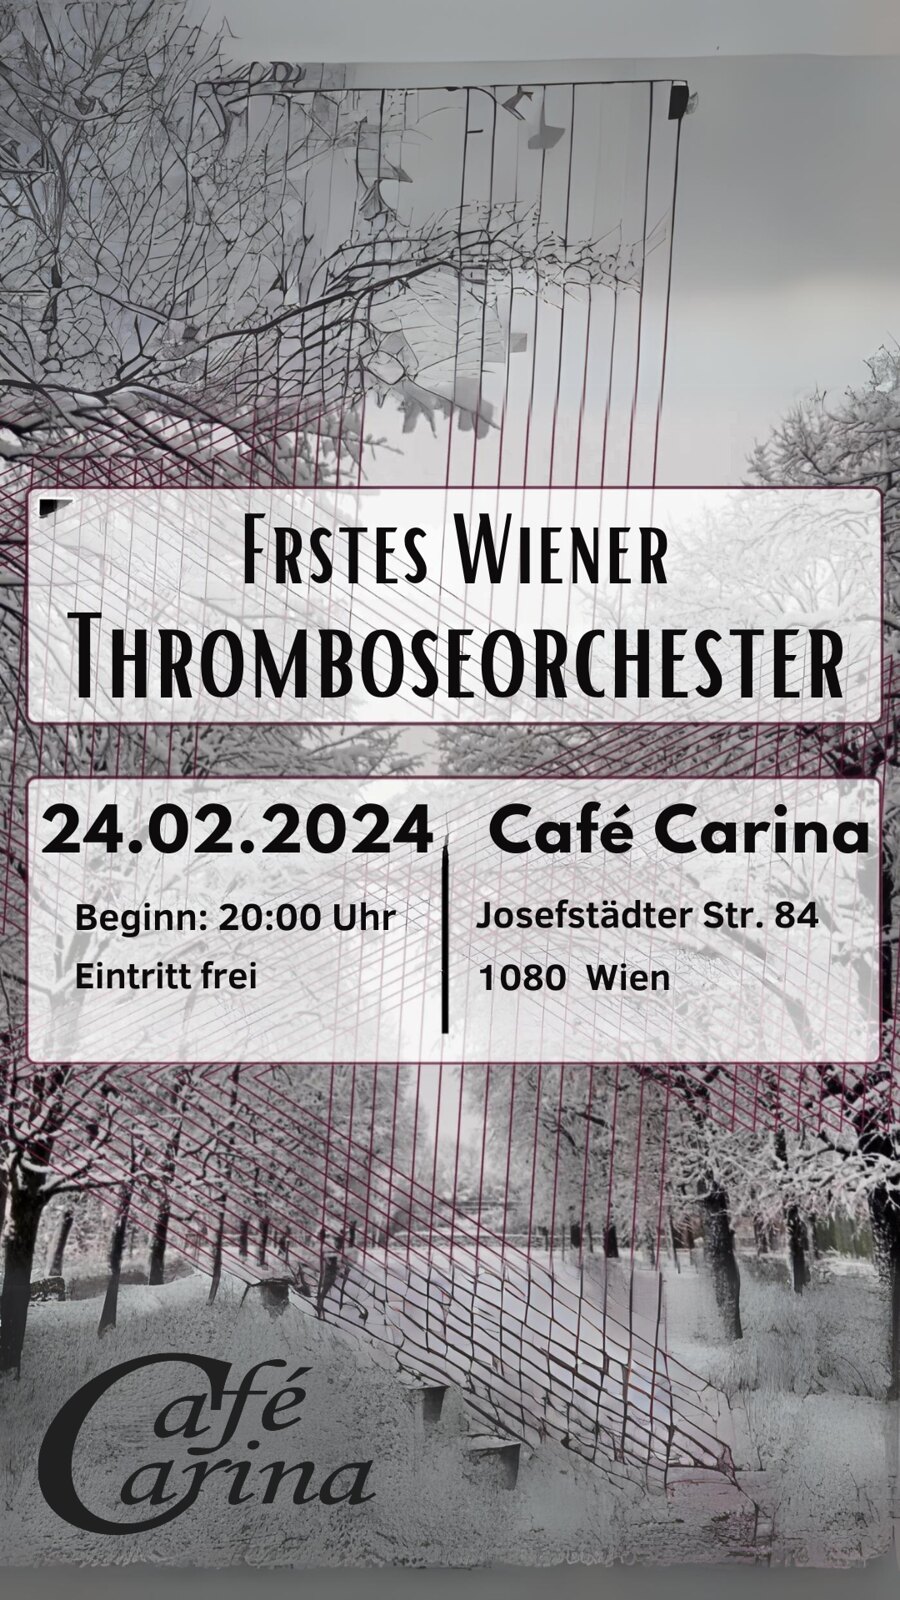 Erstes Wiener Thromboseorchester am 24. February 2024 @ Café Carina.